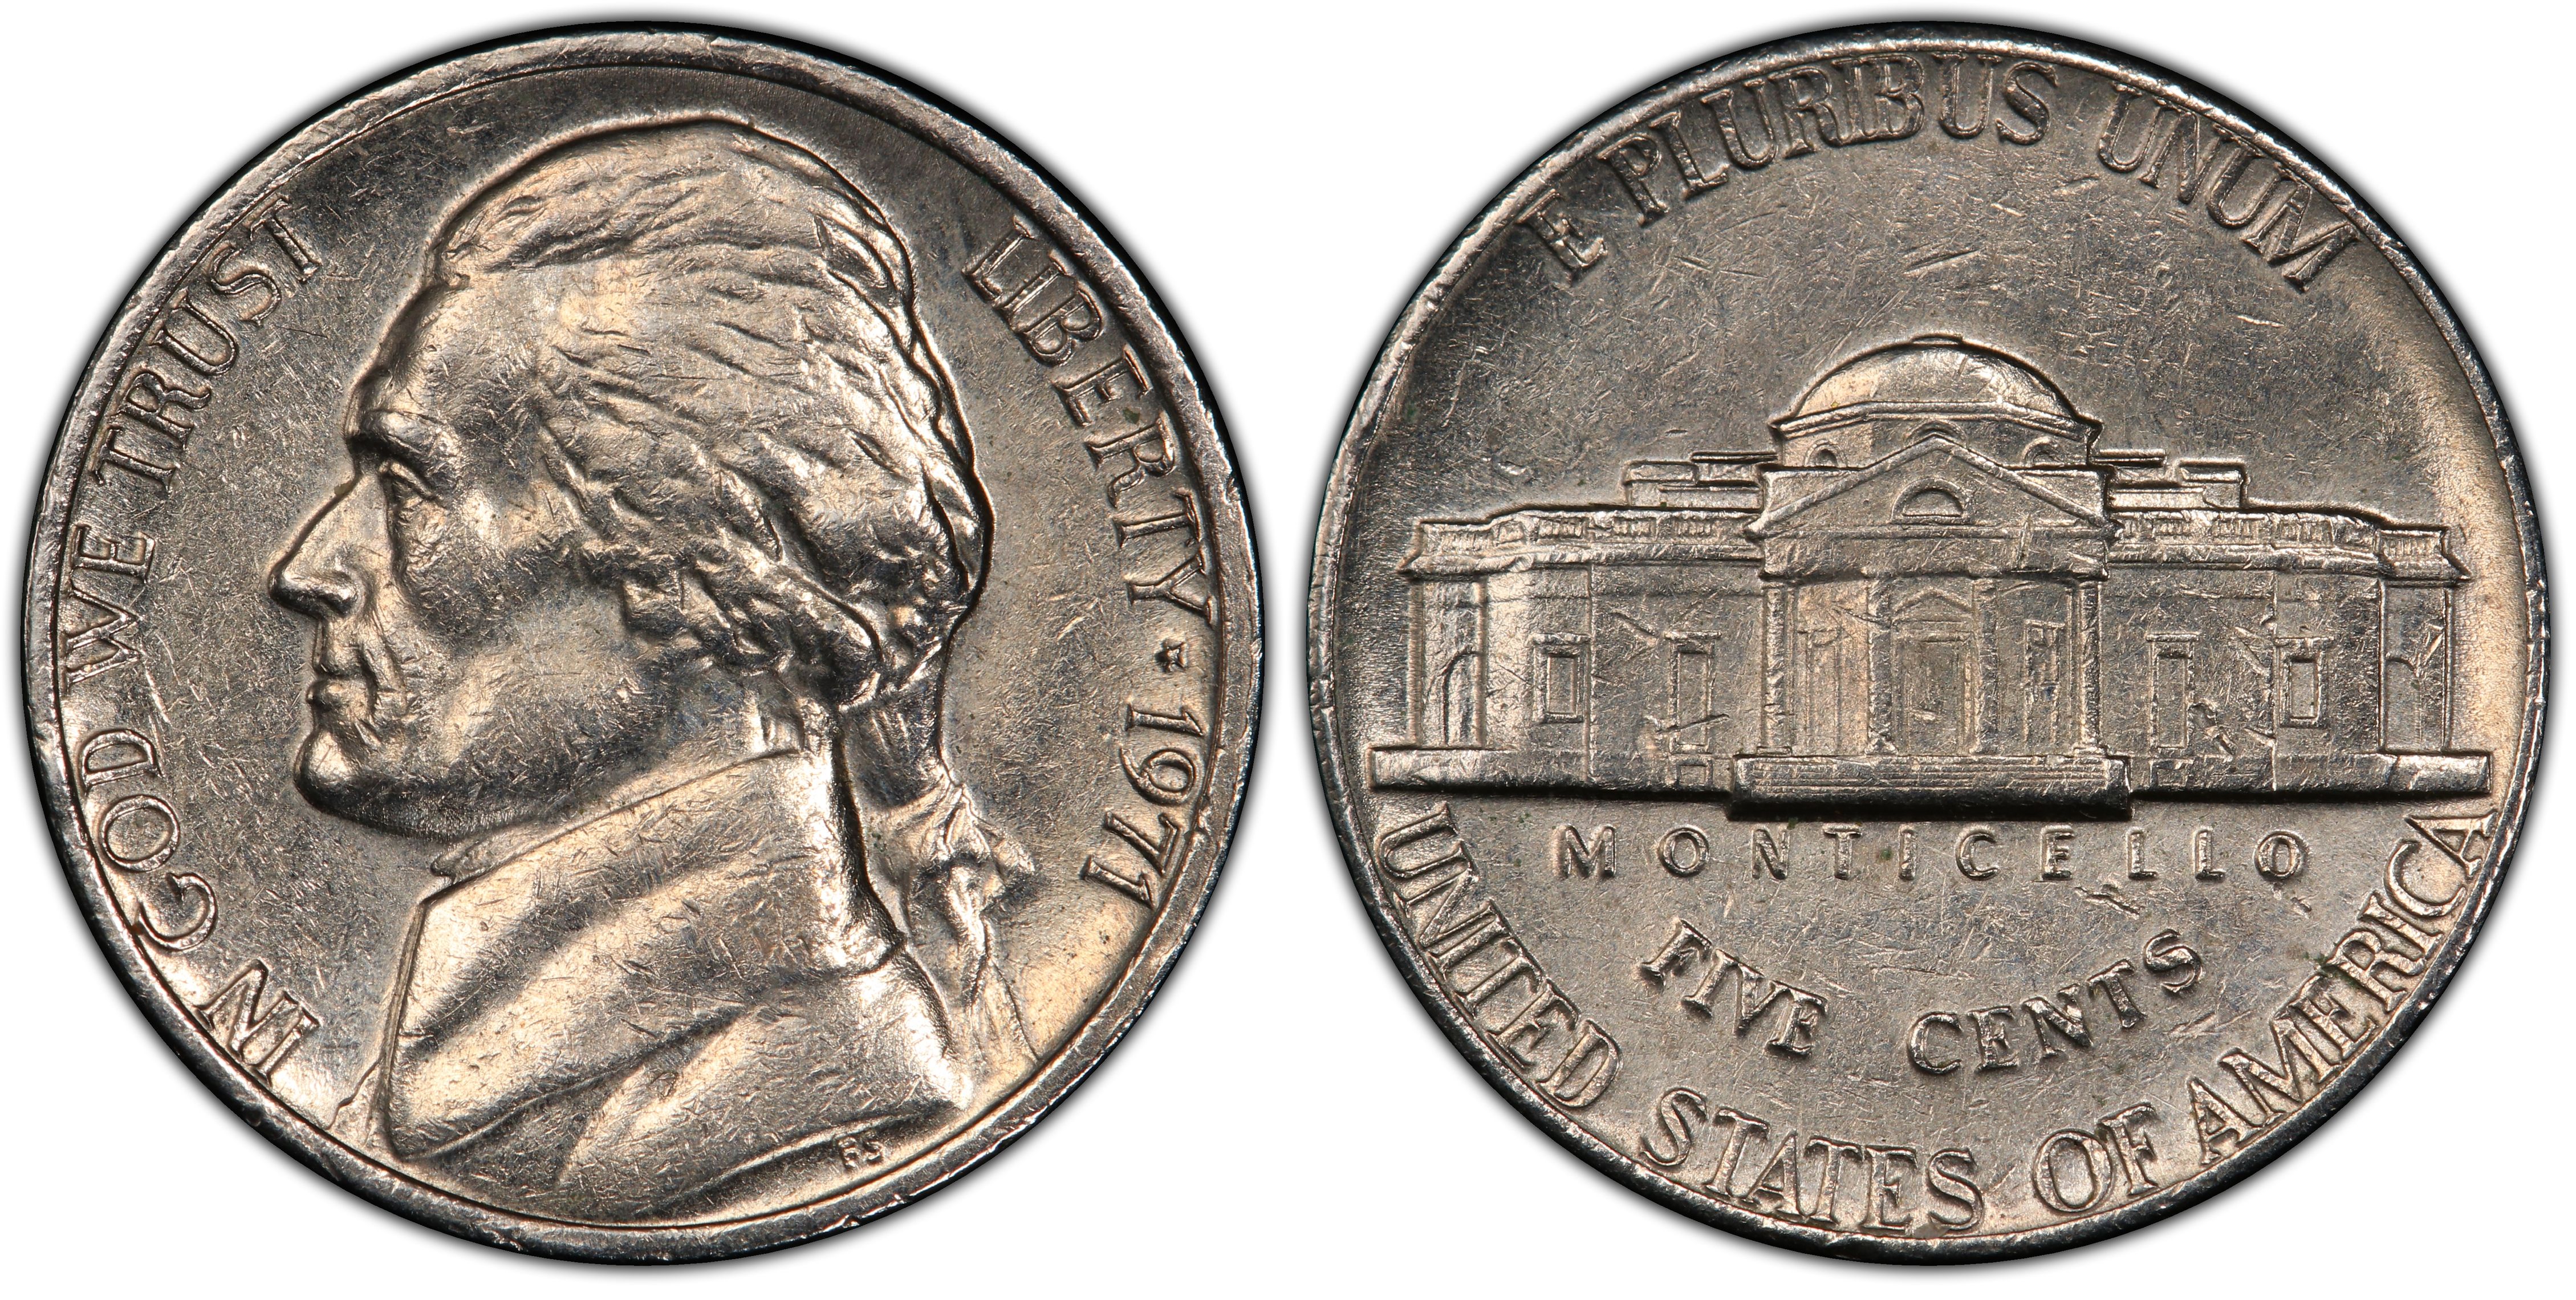 PROOF 1971 through 1979 S JEFFERSON Nickels